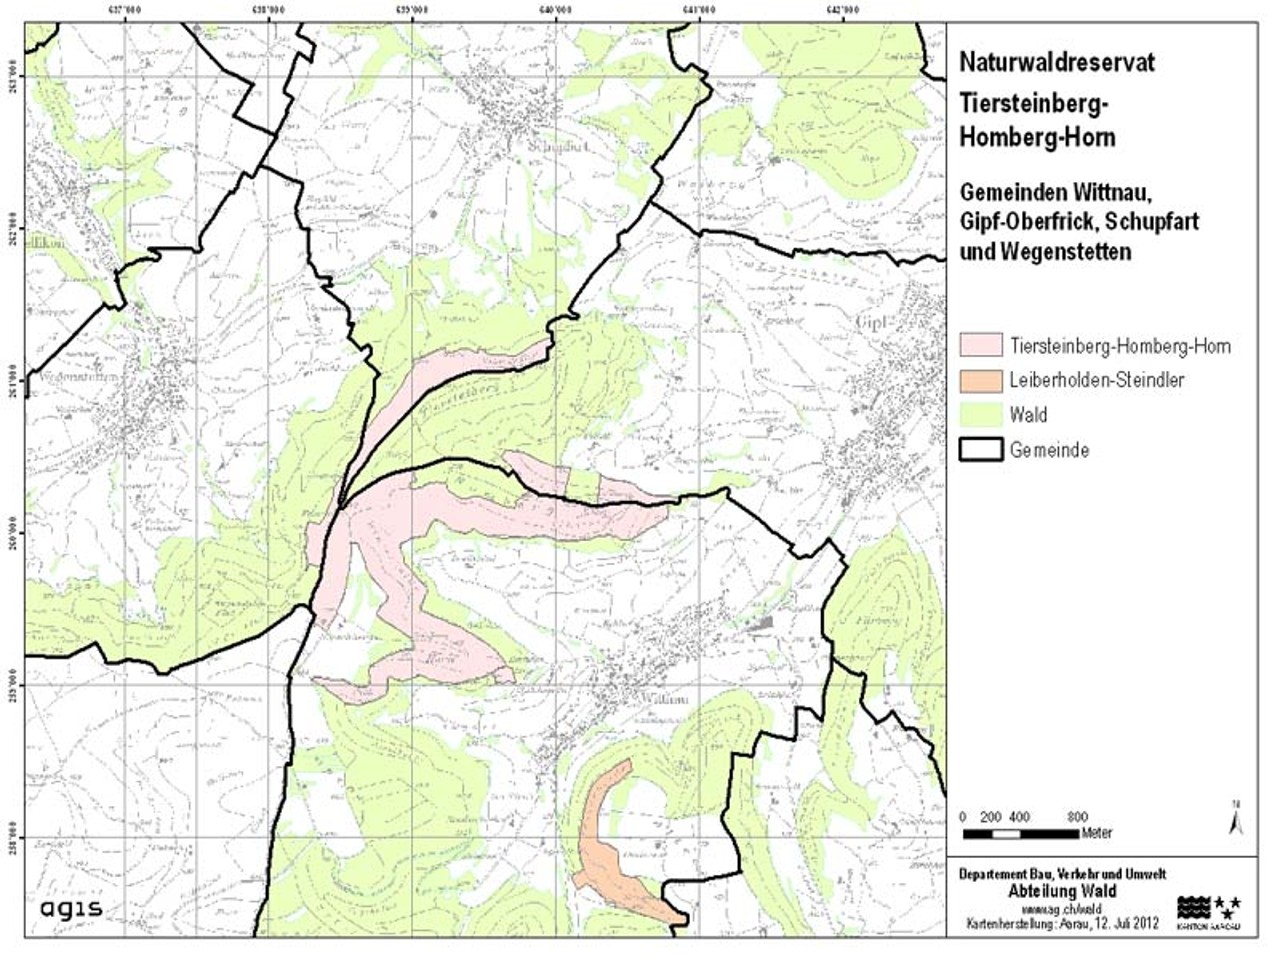 Kartenausschnitt des Naturwaldreservats Thiersteinberg-Homberg-Horn